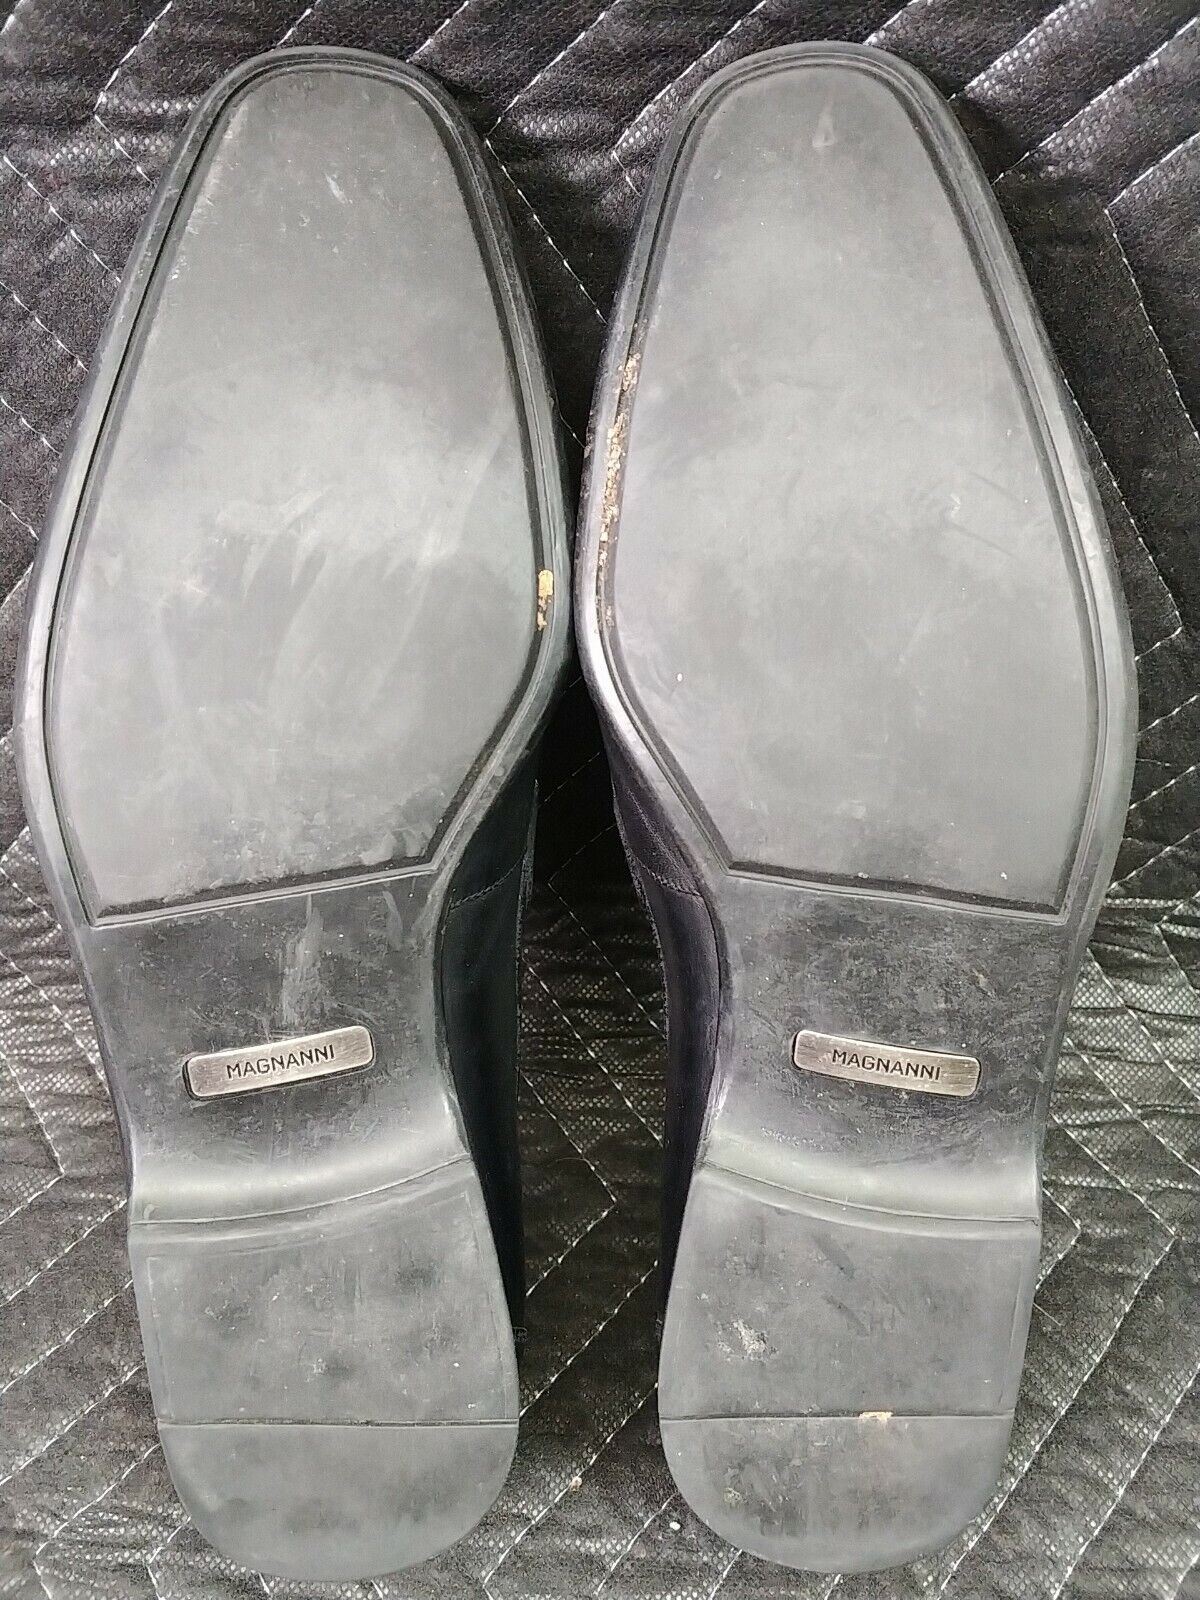 MAGNANNI Men's  Black Leather LINO Loafers Shoes 15061 Size 9M Spain EU42